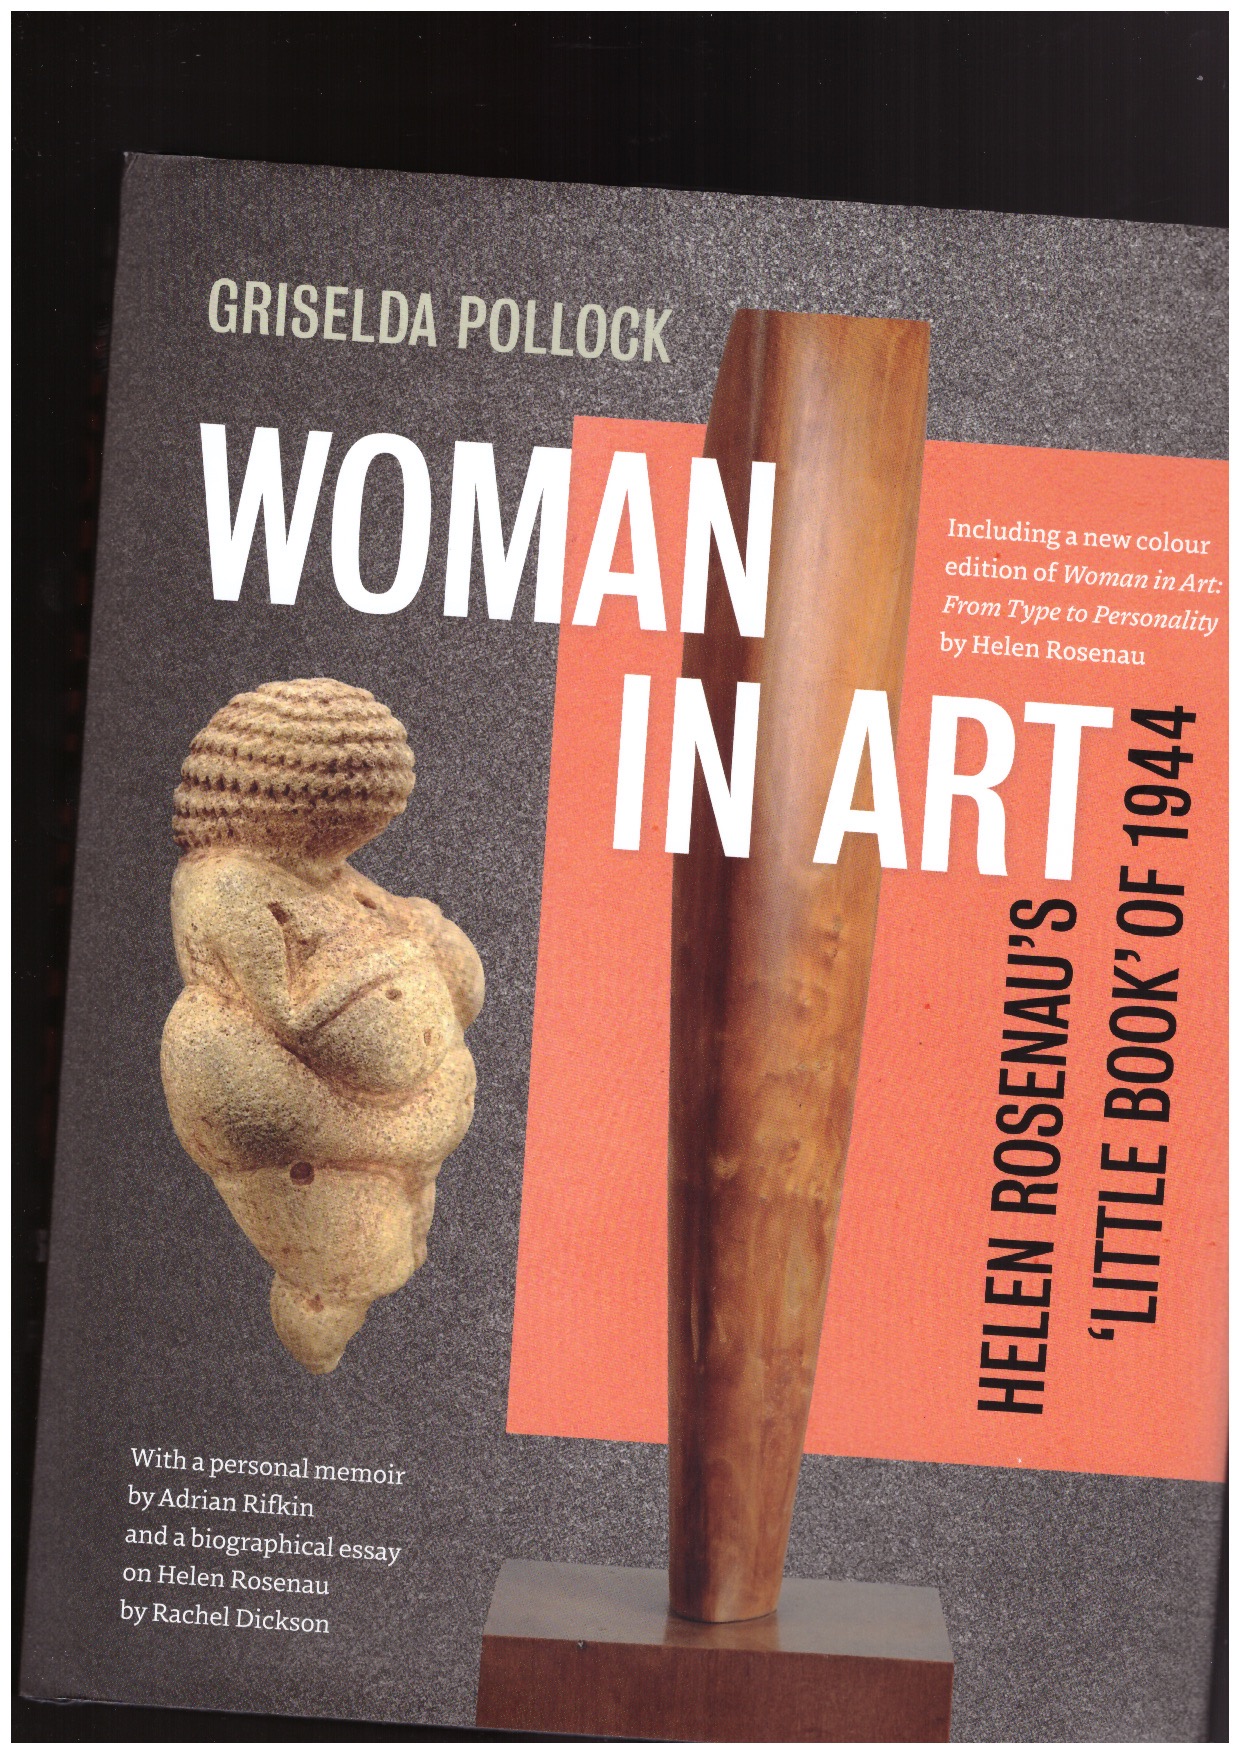 POLLOCK, Griselda; ROSENAU, Helen - Woman in Art: Helen Rosenau’s ‘Little Book’ of 1944